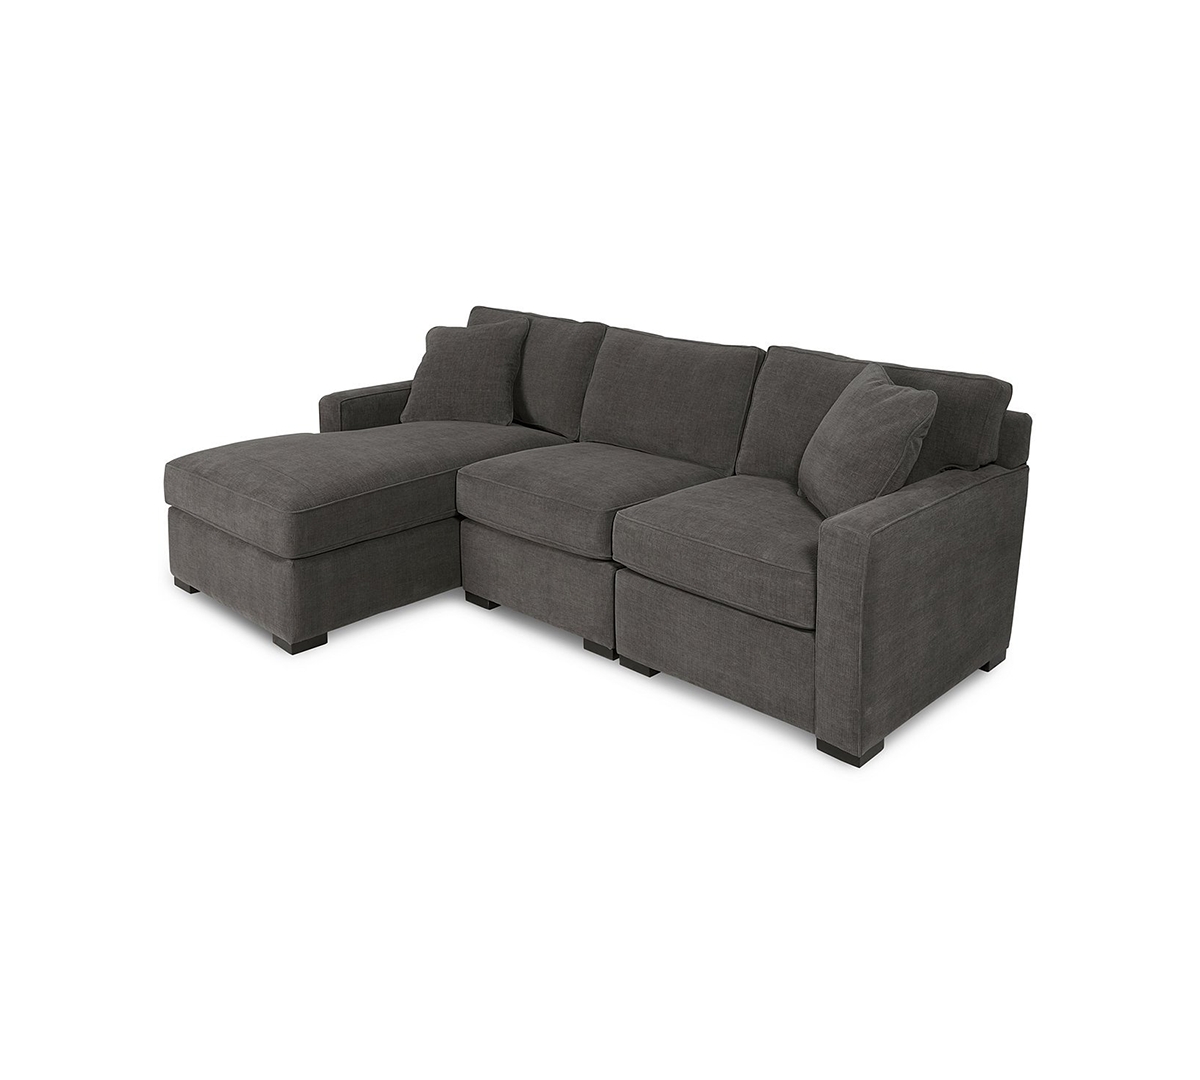 Radley 3-Piece Fabric Chaise Sectional Sofa, Created for Macys